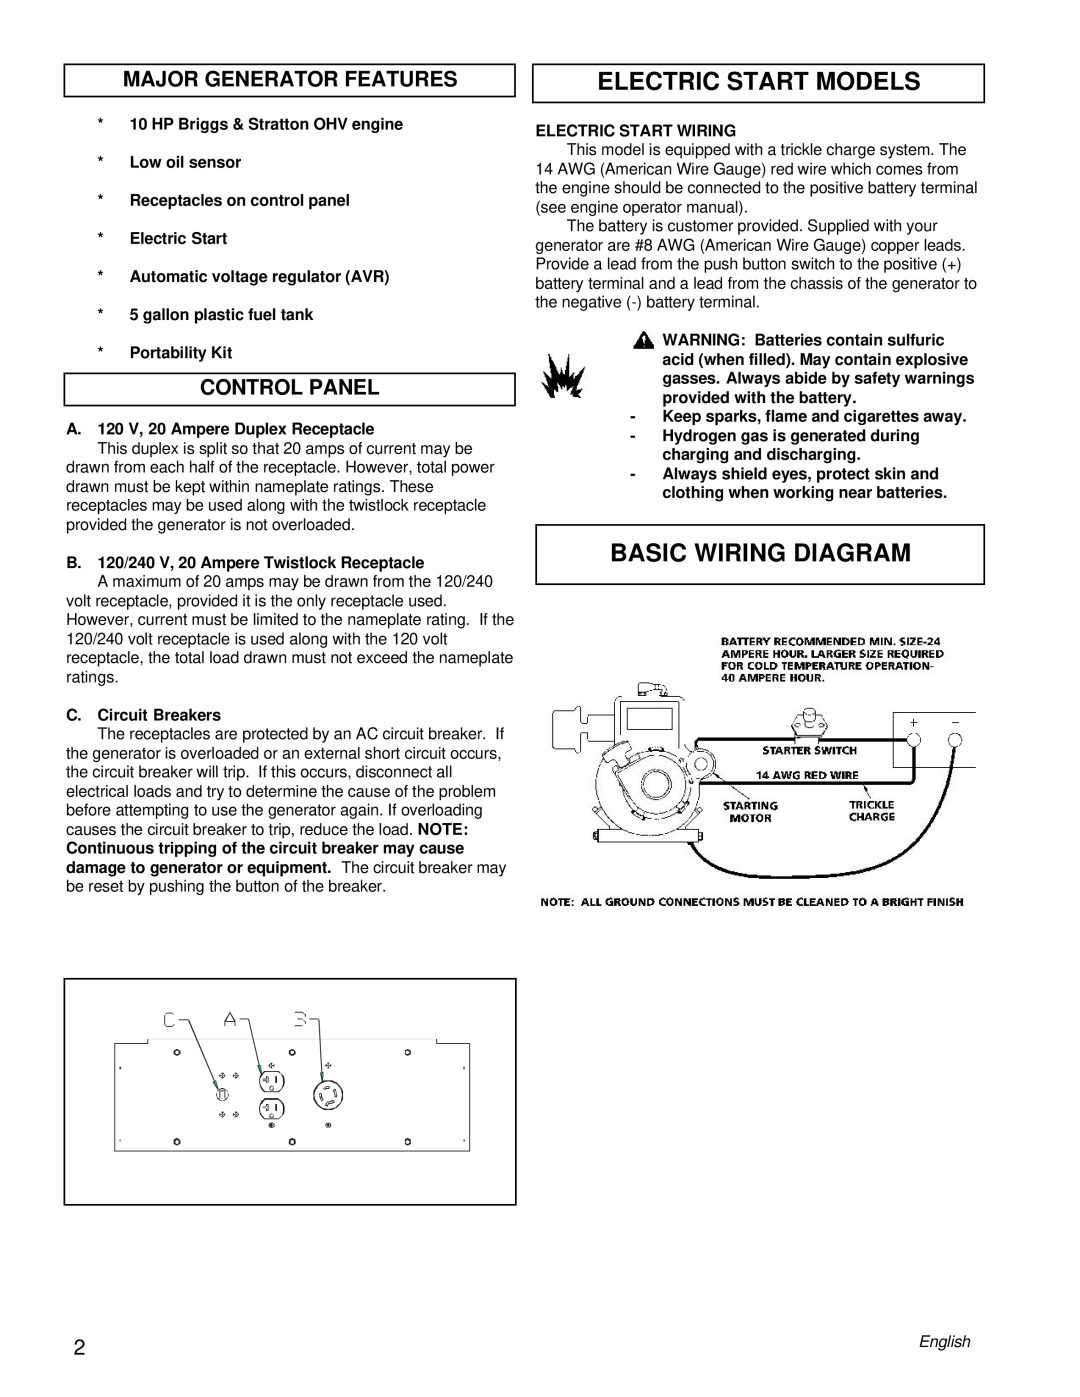 Powermate PC0505622.17 manual Electric Start Models, Basic Wiring Diagram, Major Generator Features, Control Panel 